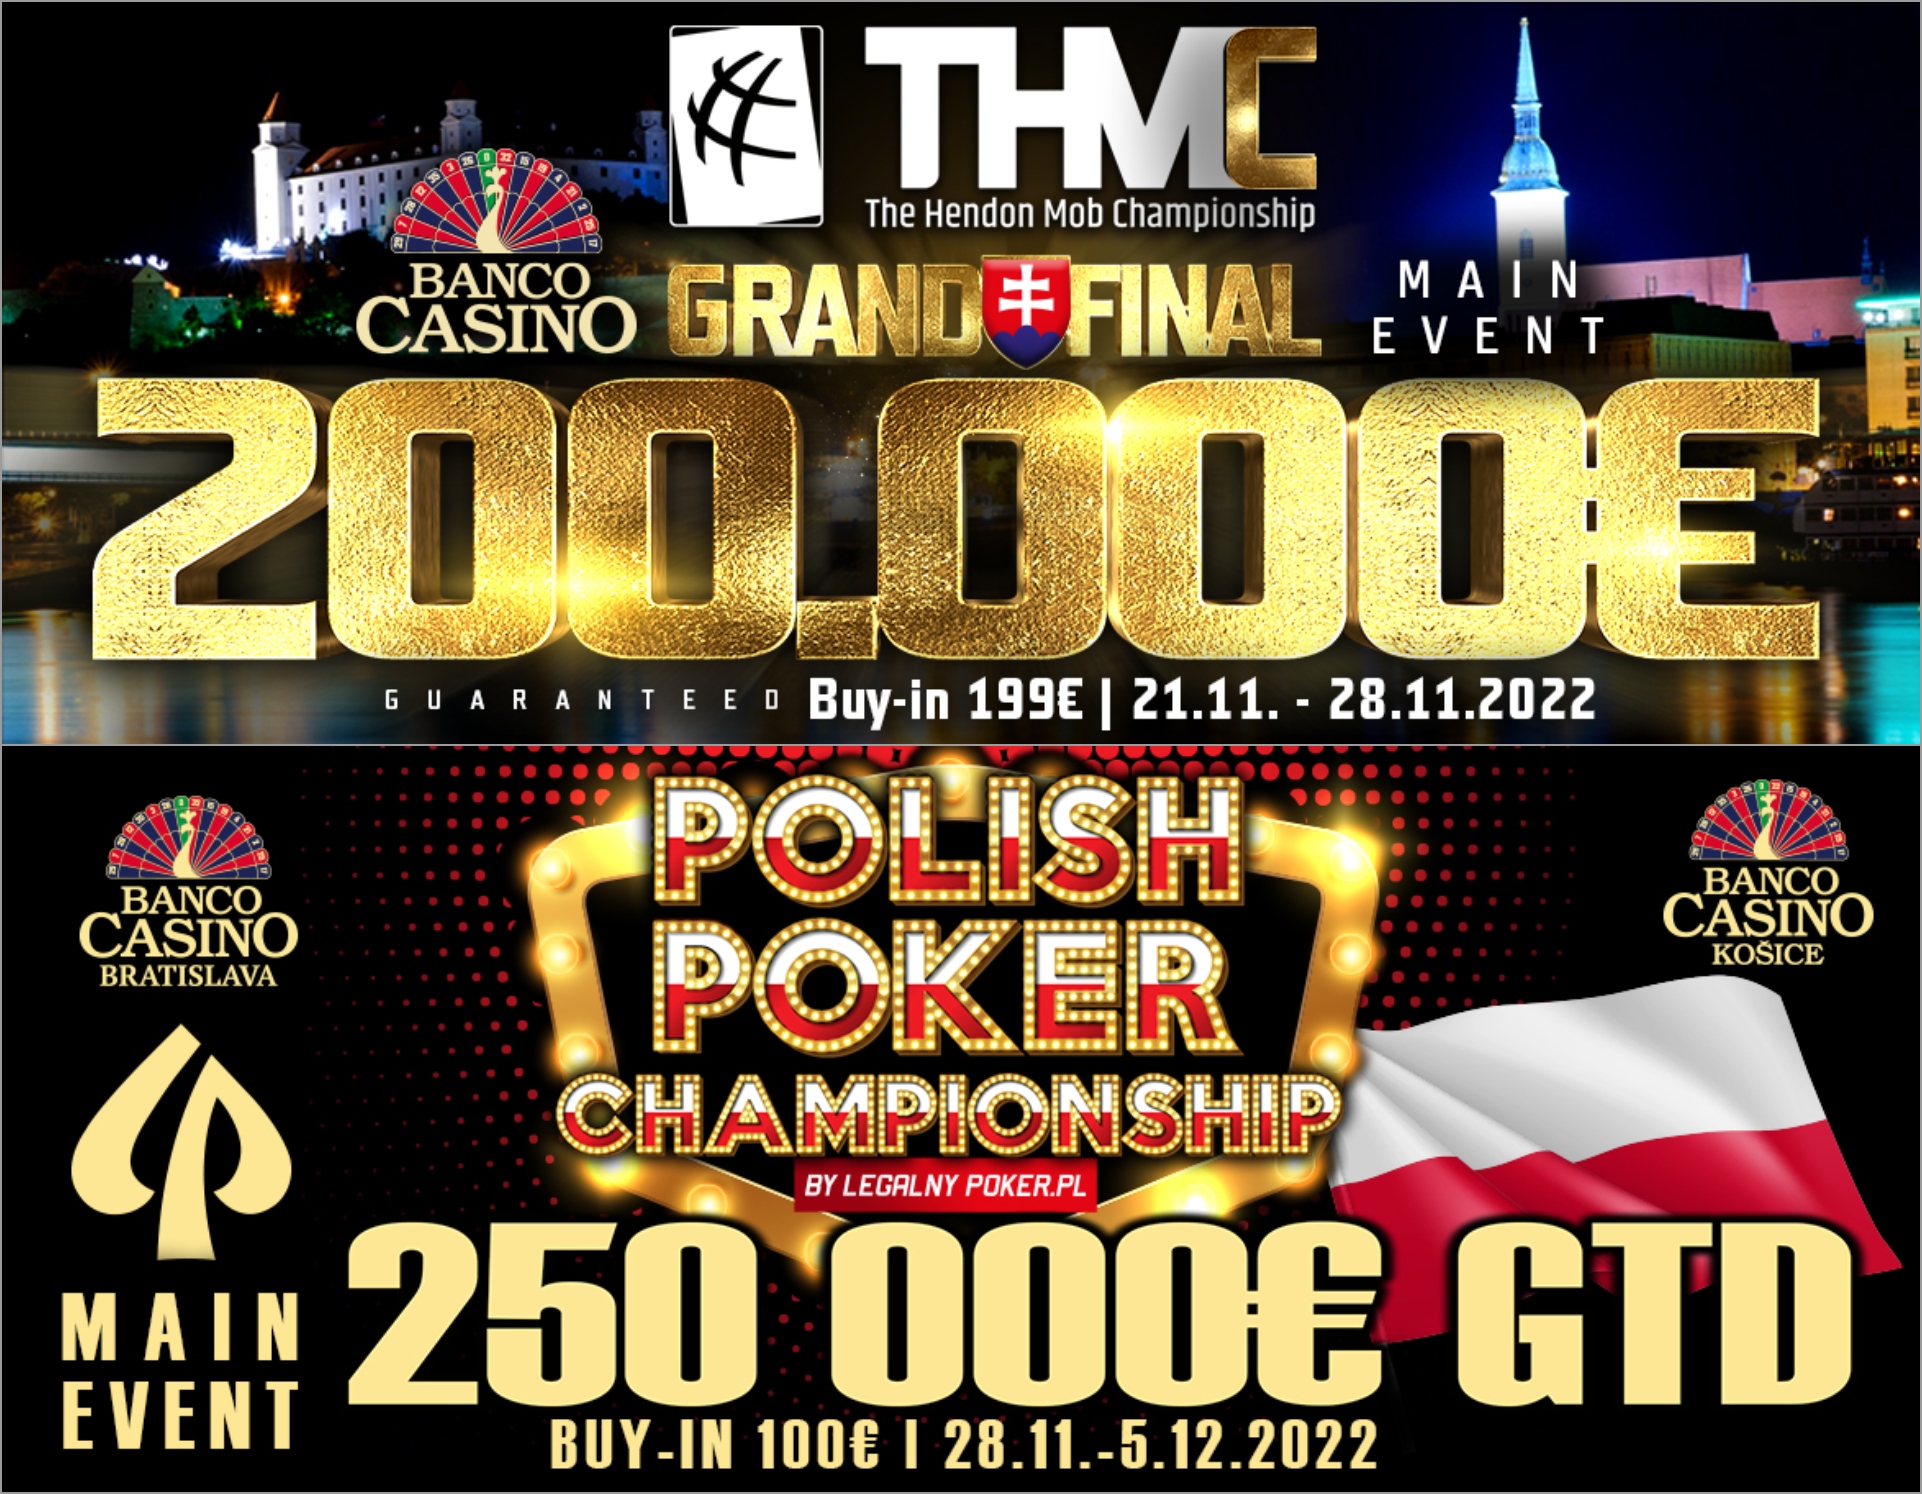 Záver roka v Banco Casino – The Hendonmob Championship Grand Final 200.000€ GTD a Polish Poker Championship 250.000€ GTD!